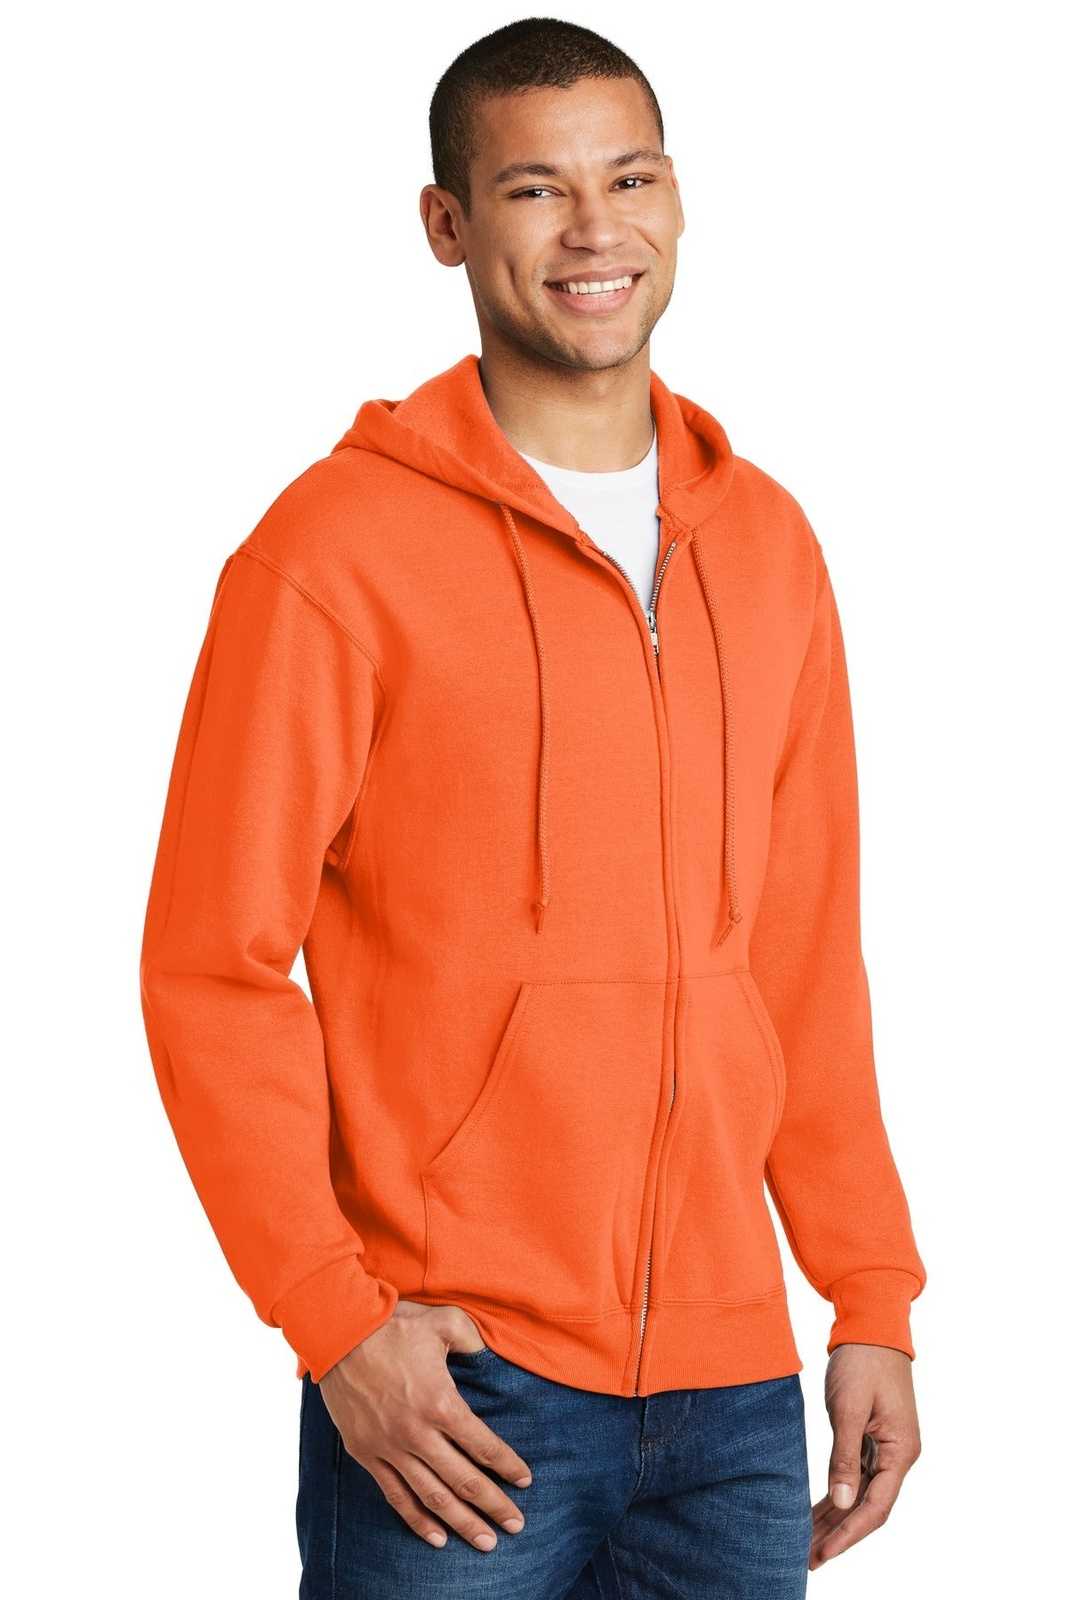 Jerzees 993M Nublend Full-Zip Hooded Sweatshirt - Safety Orange - HIT a Double